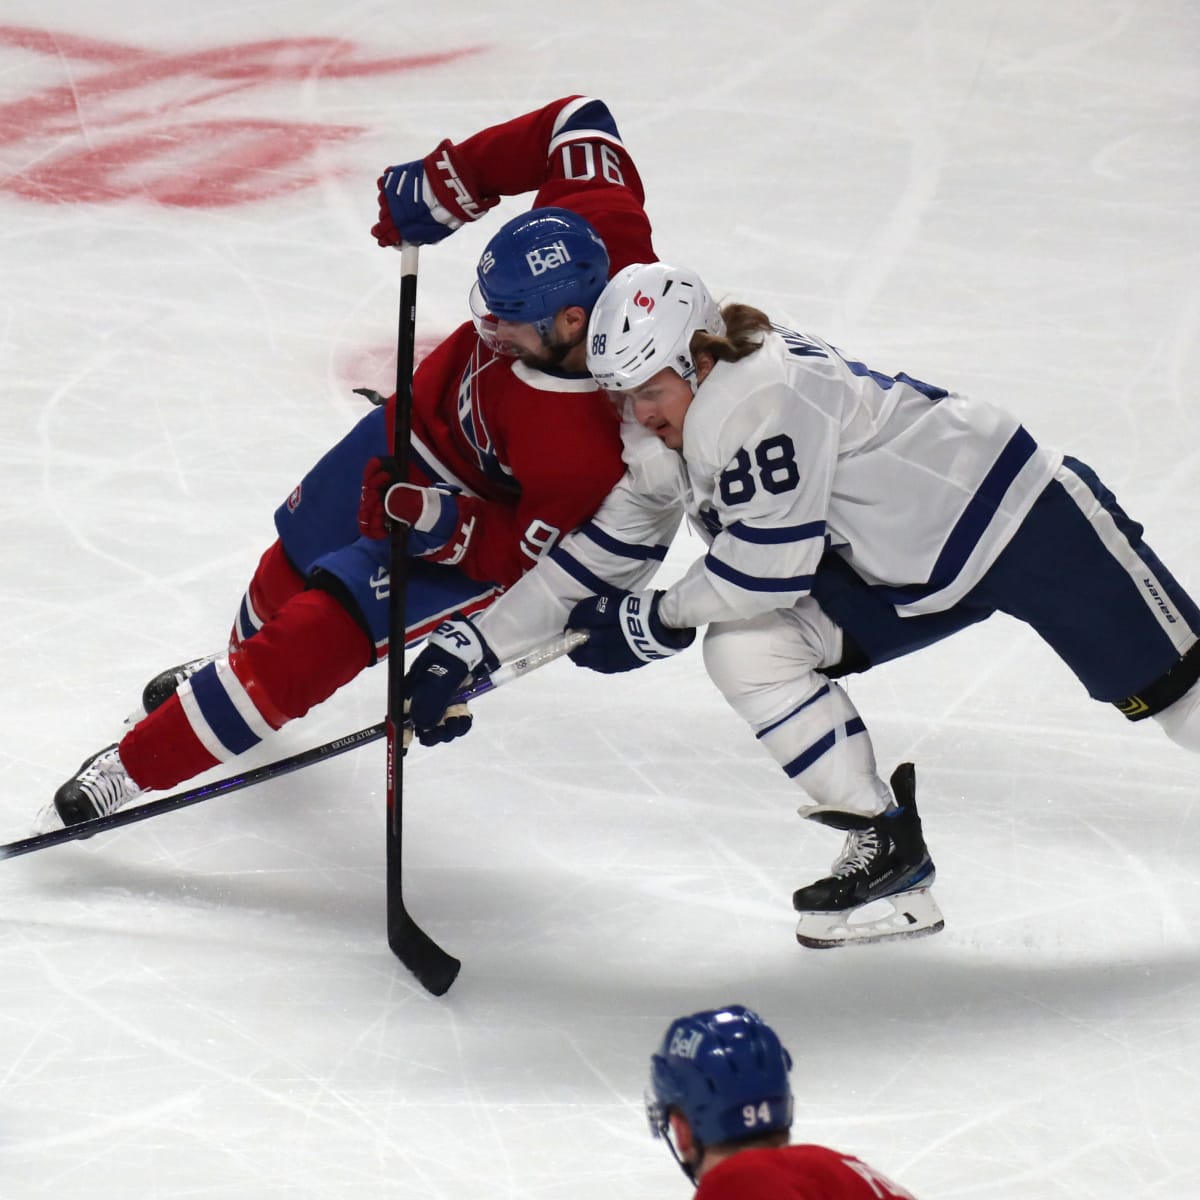 Dubas gets his defenceman: Maple Leafs acquire Muzzin in trade